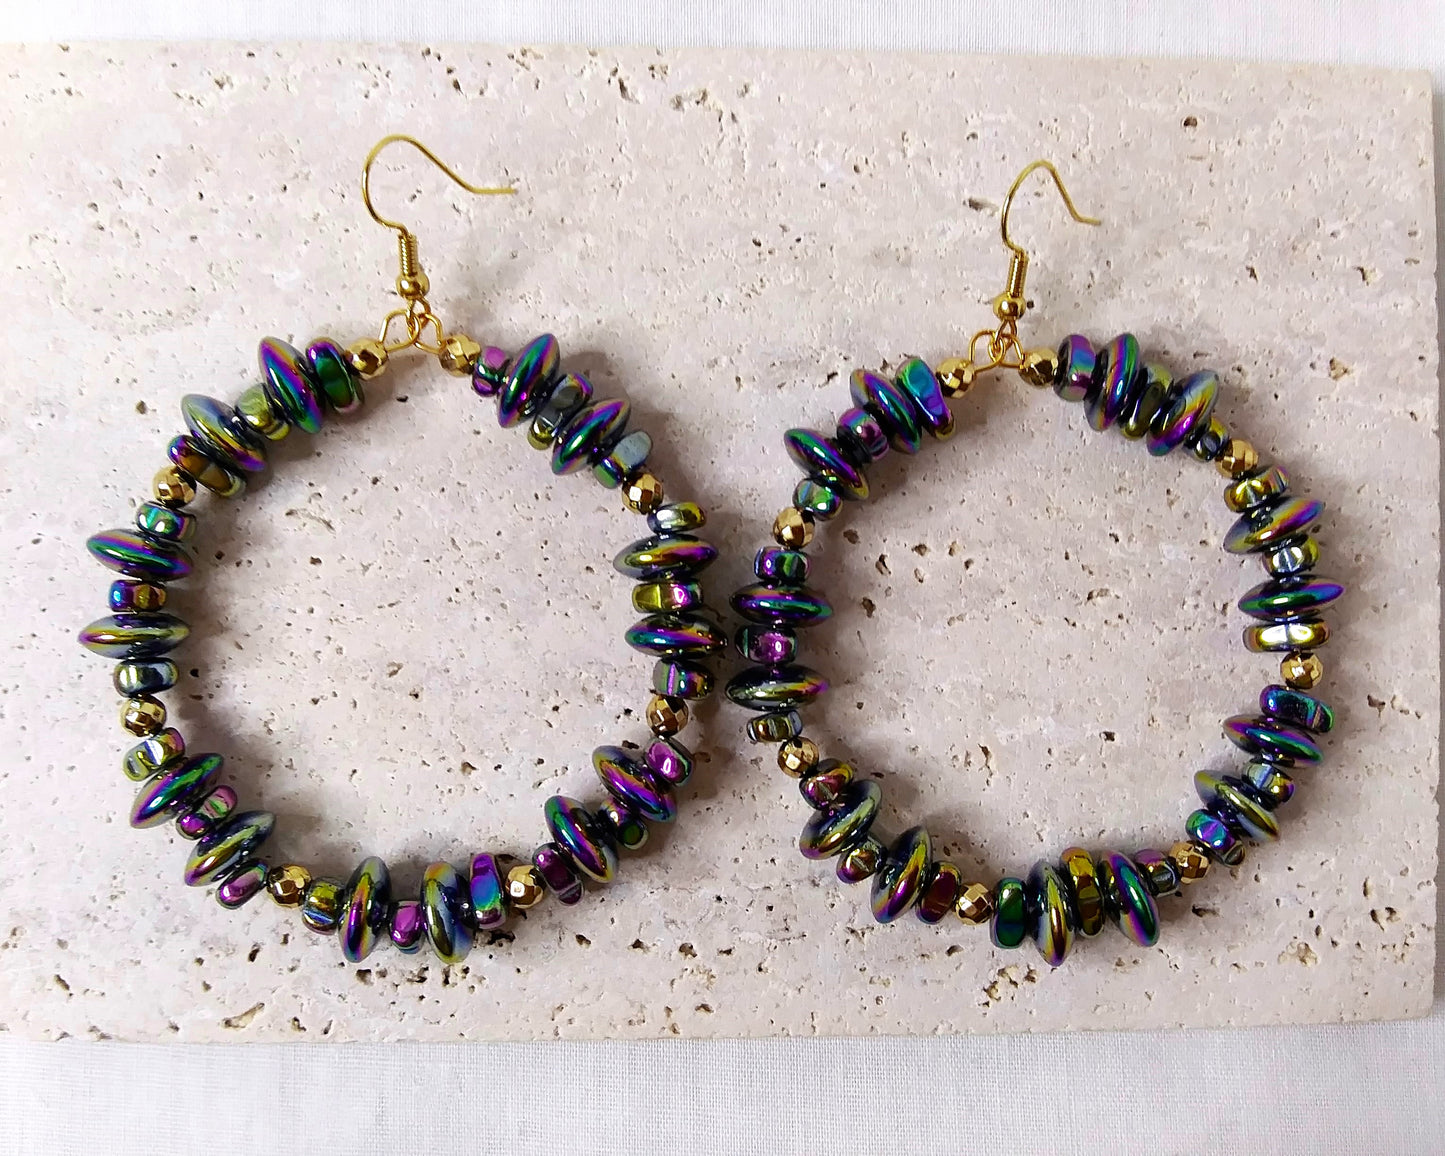 Hematite Beads & Glass Beads colorful hoop earrings